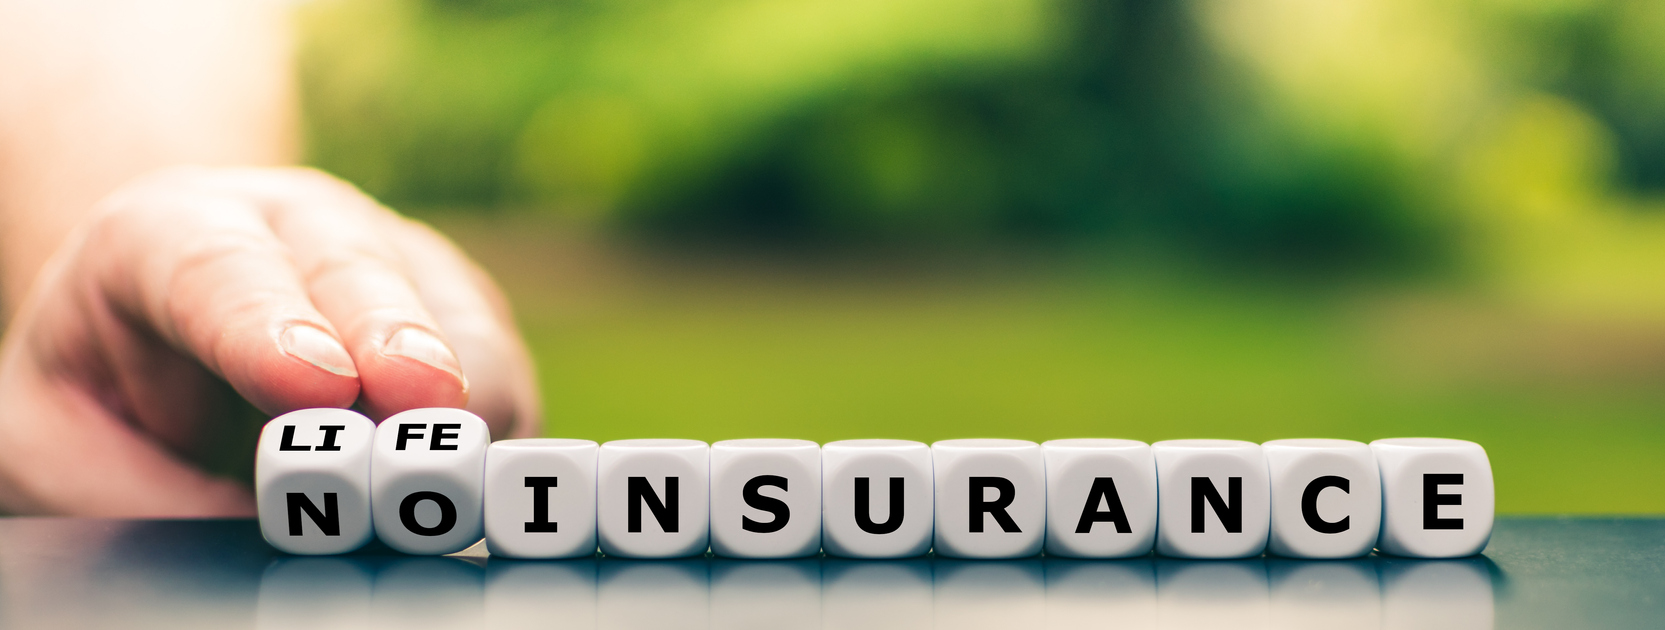 Top 6 Benefits Of Term Insurance PlanPNB MetLife